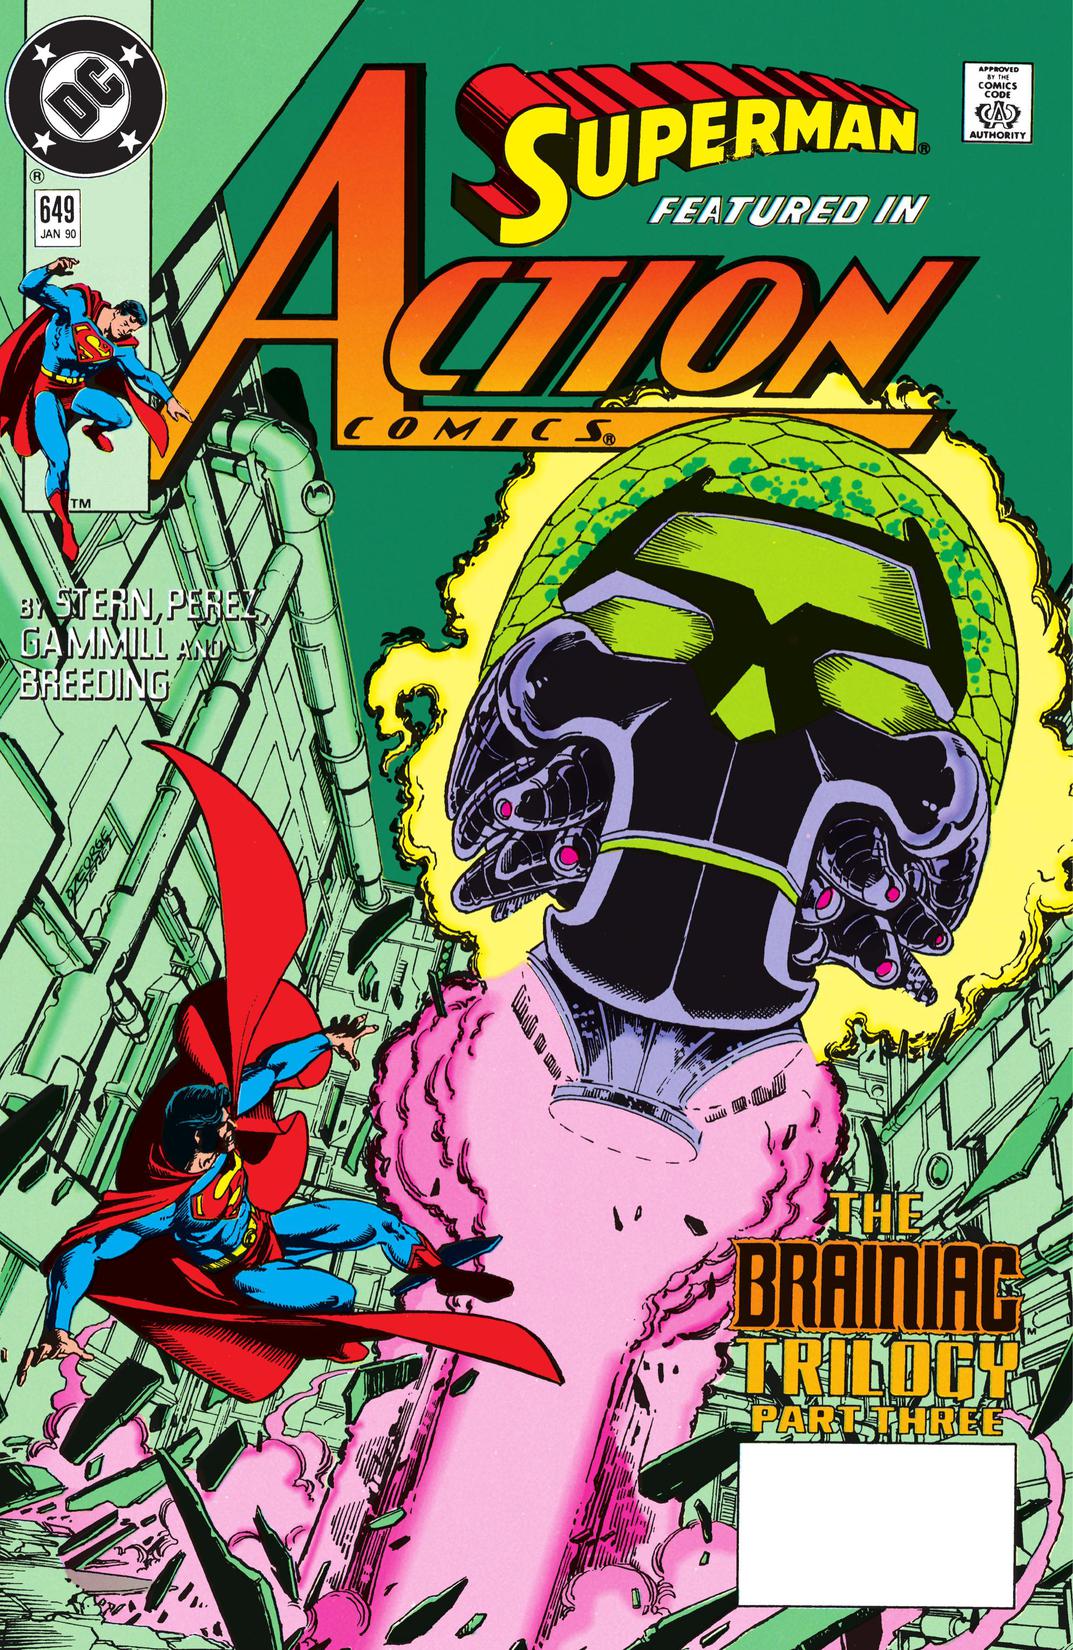 Action Comics (1938-2011) #649 preview images